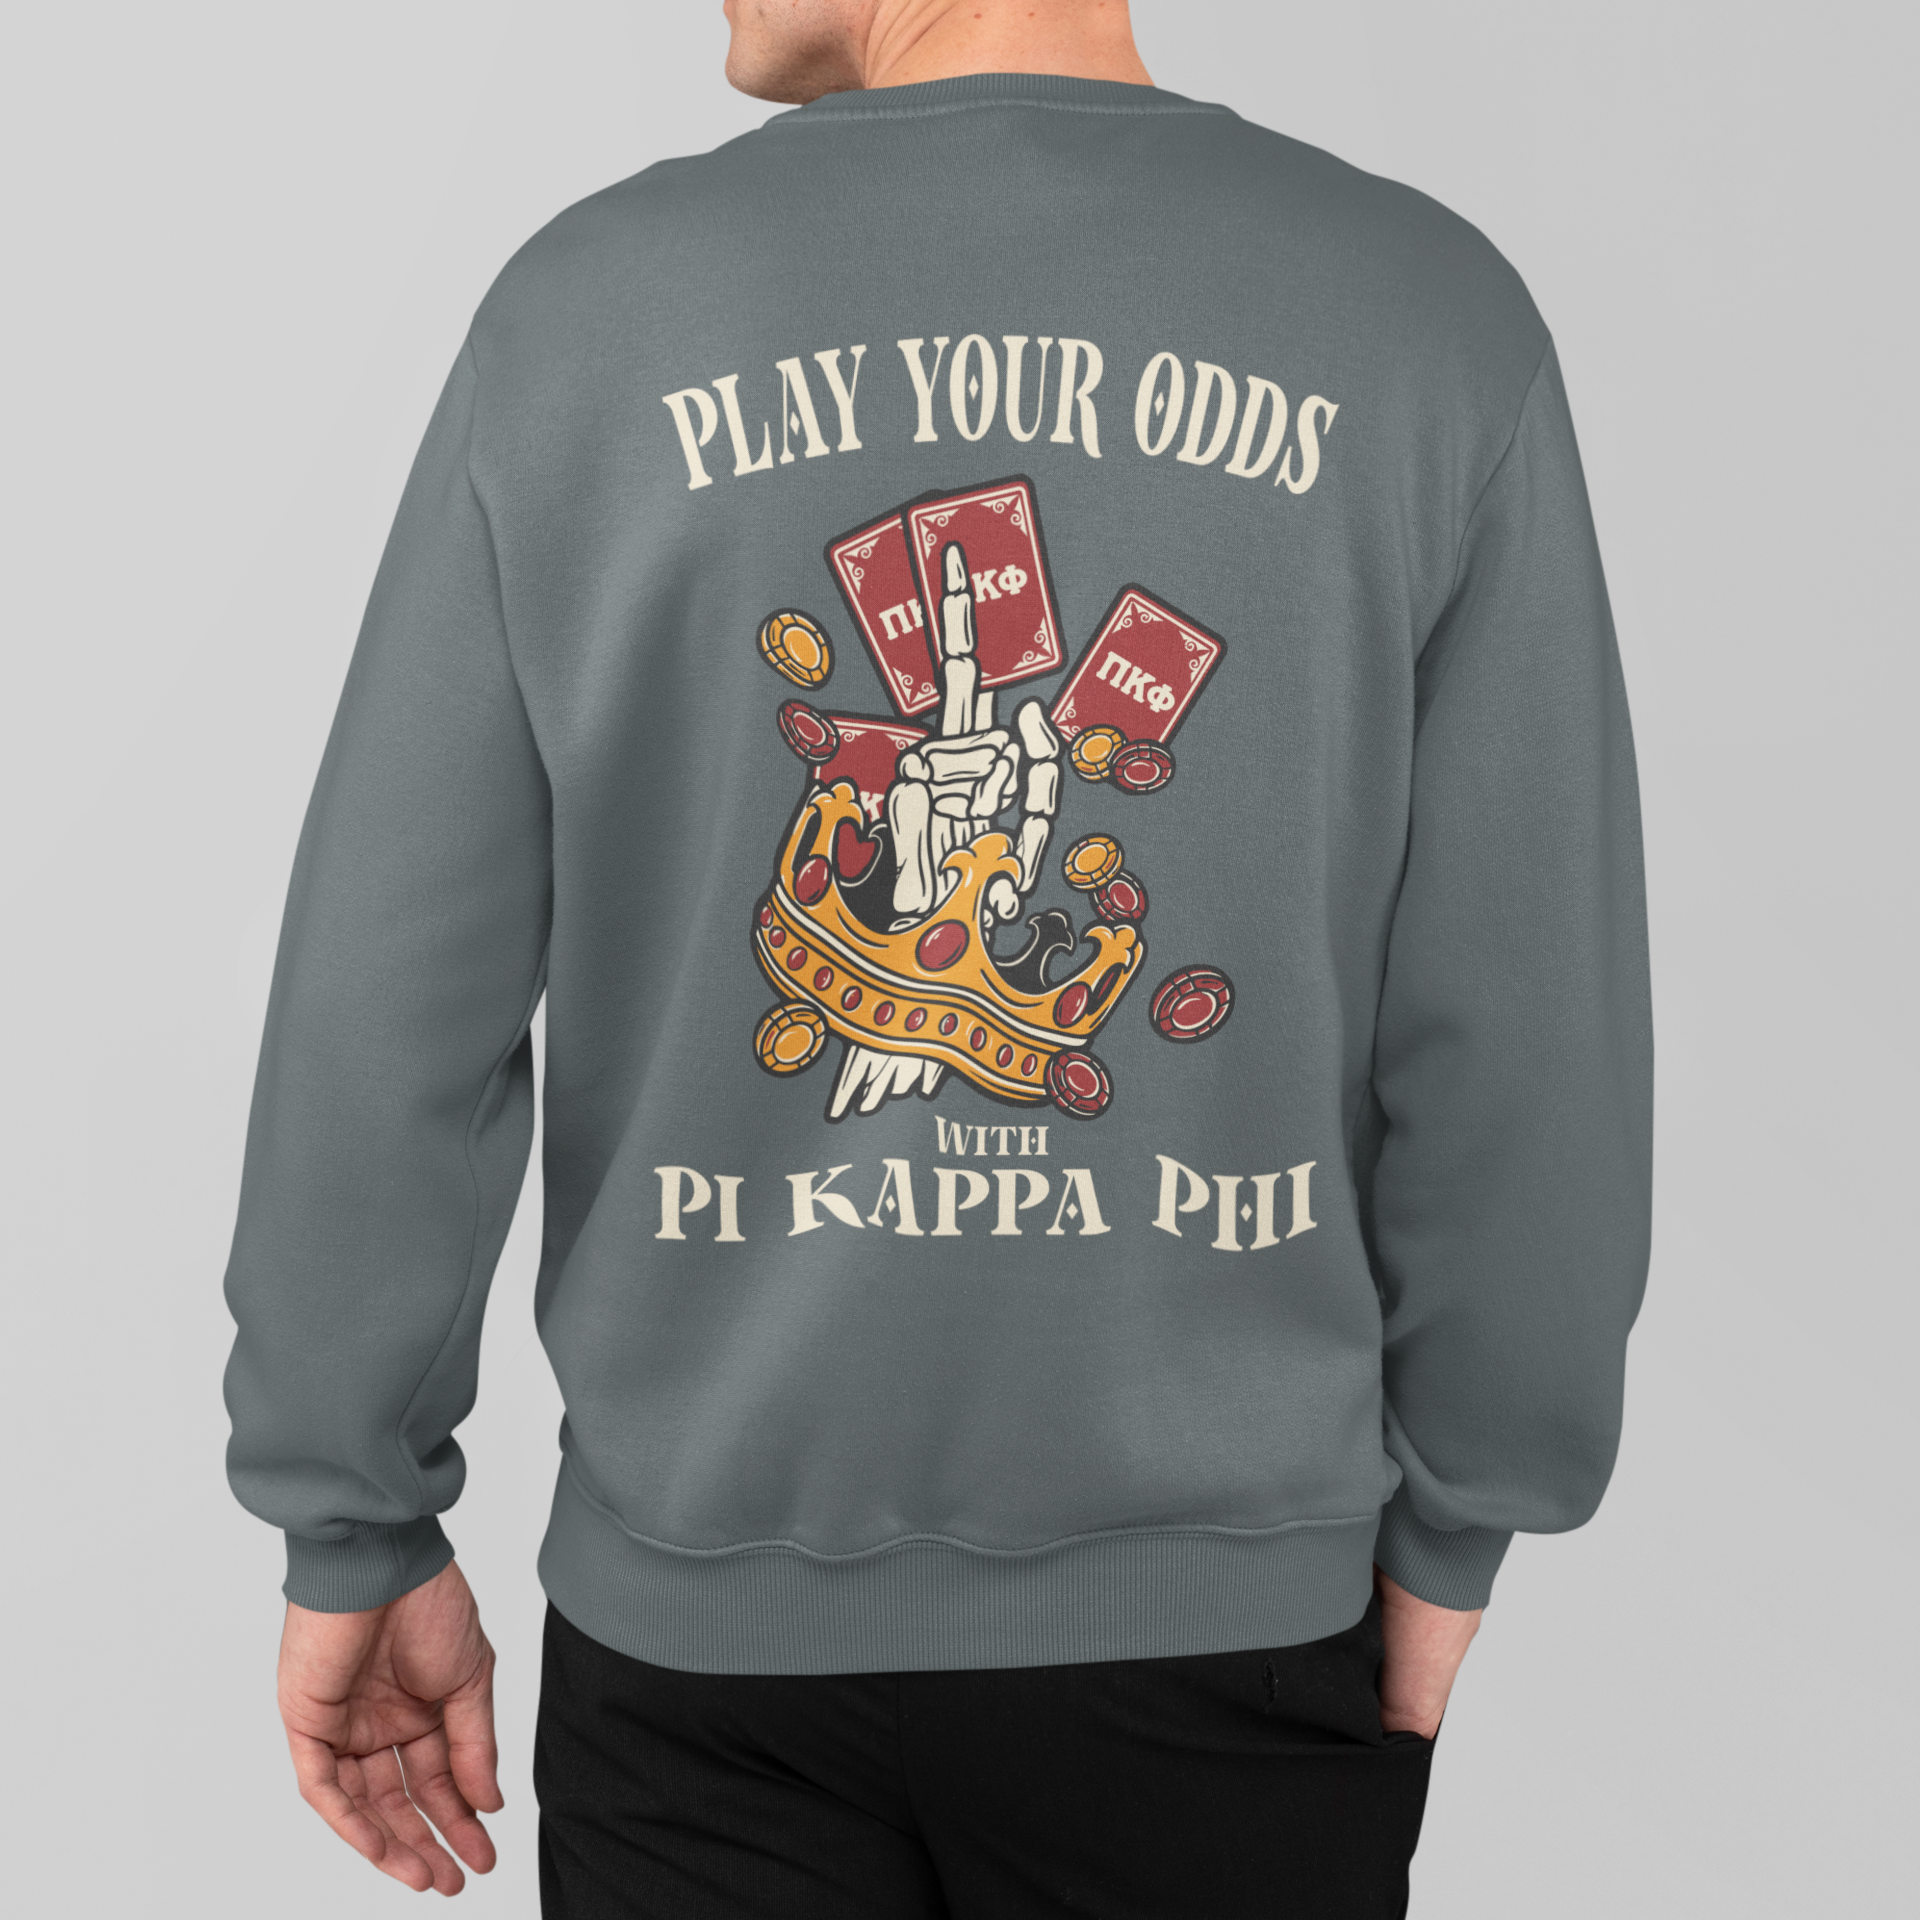 Pi Kappa Phi Graphic Crewneck Sweatshirt | Play Your Odds | Pi Kappa Phi Apparel and Merchandise model 